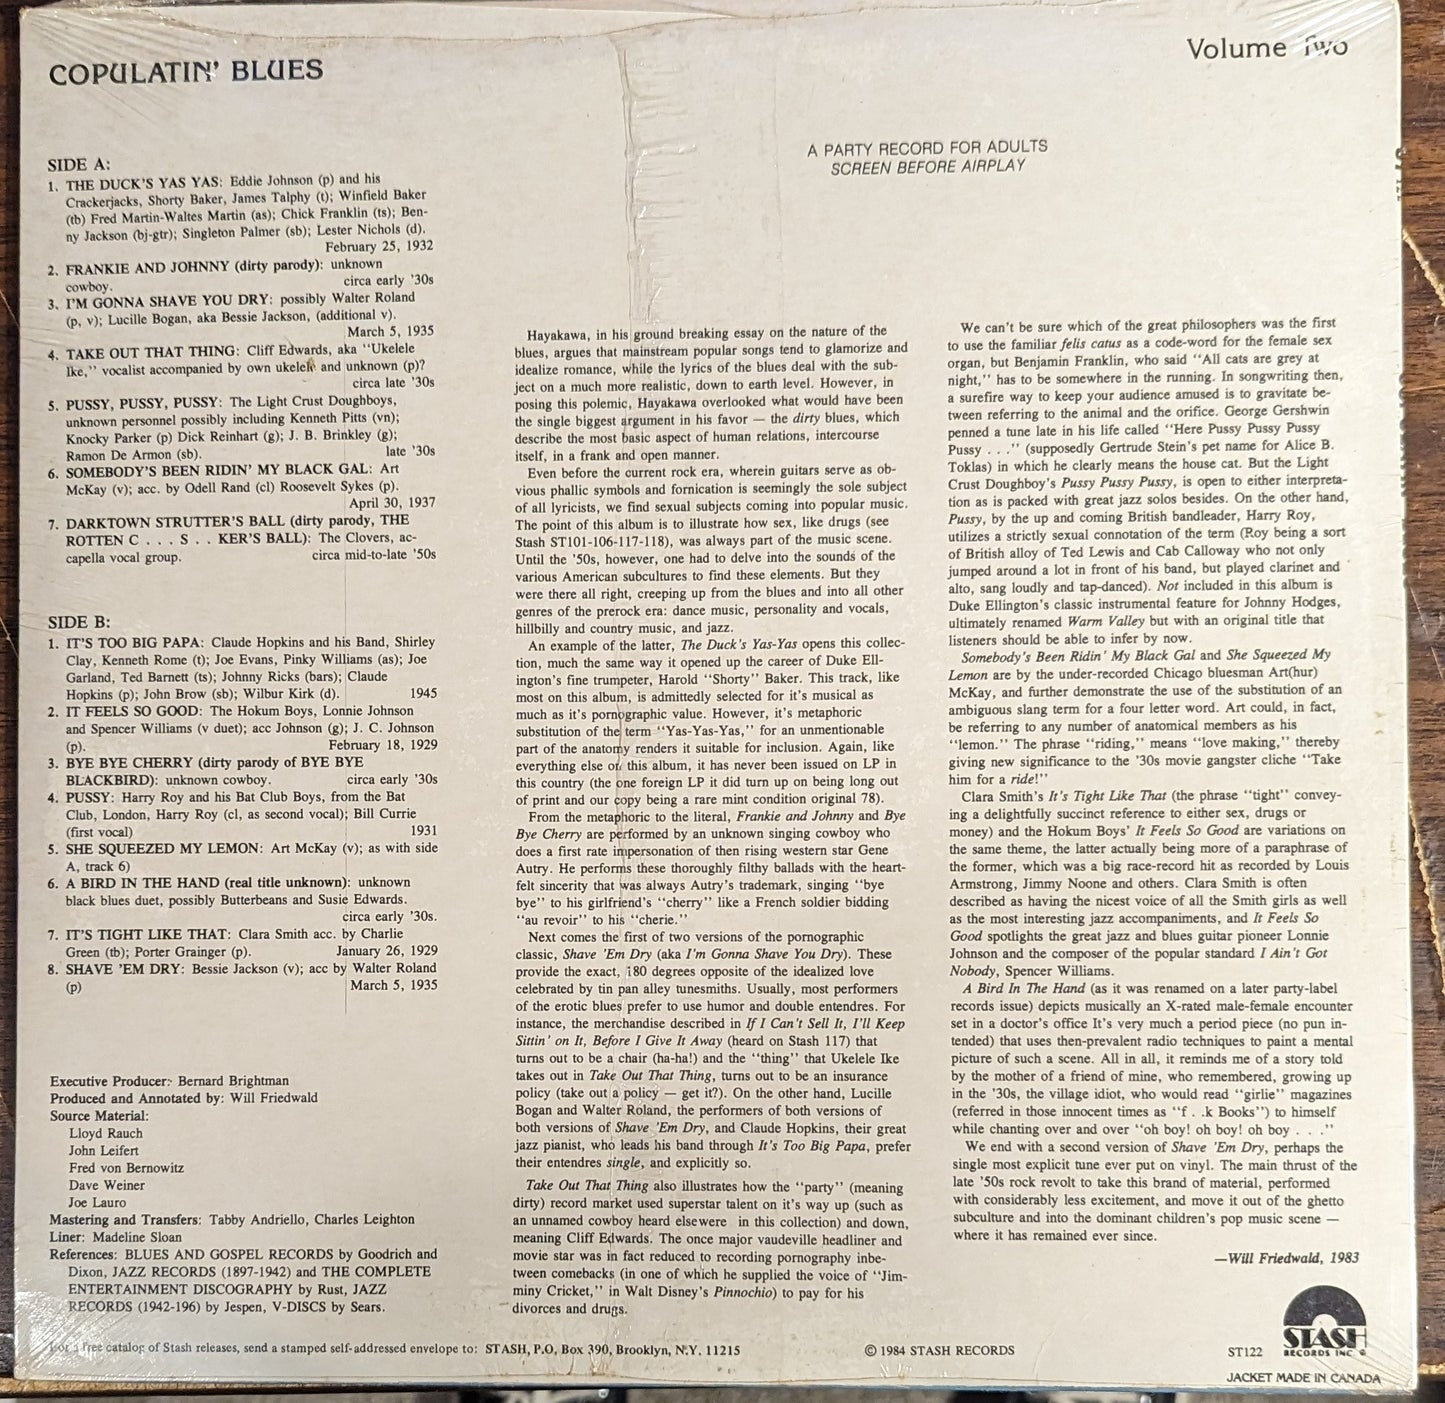 Various Copulatin' Blues Volume Two LP Mint (M) Near Mint (NM or M-)